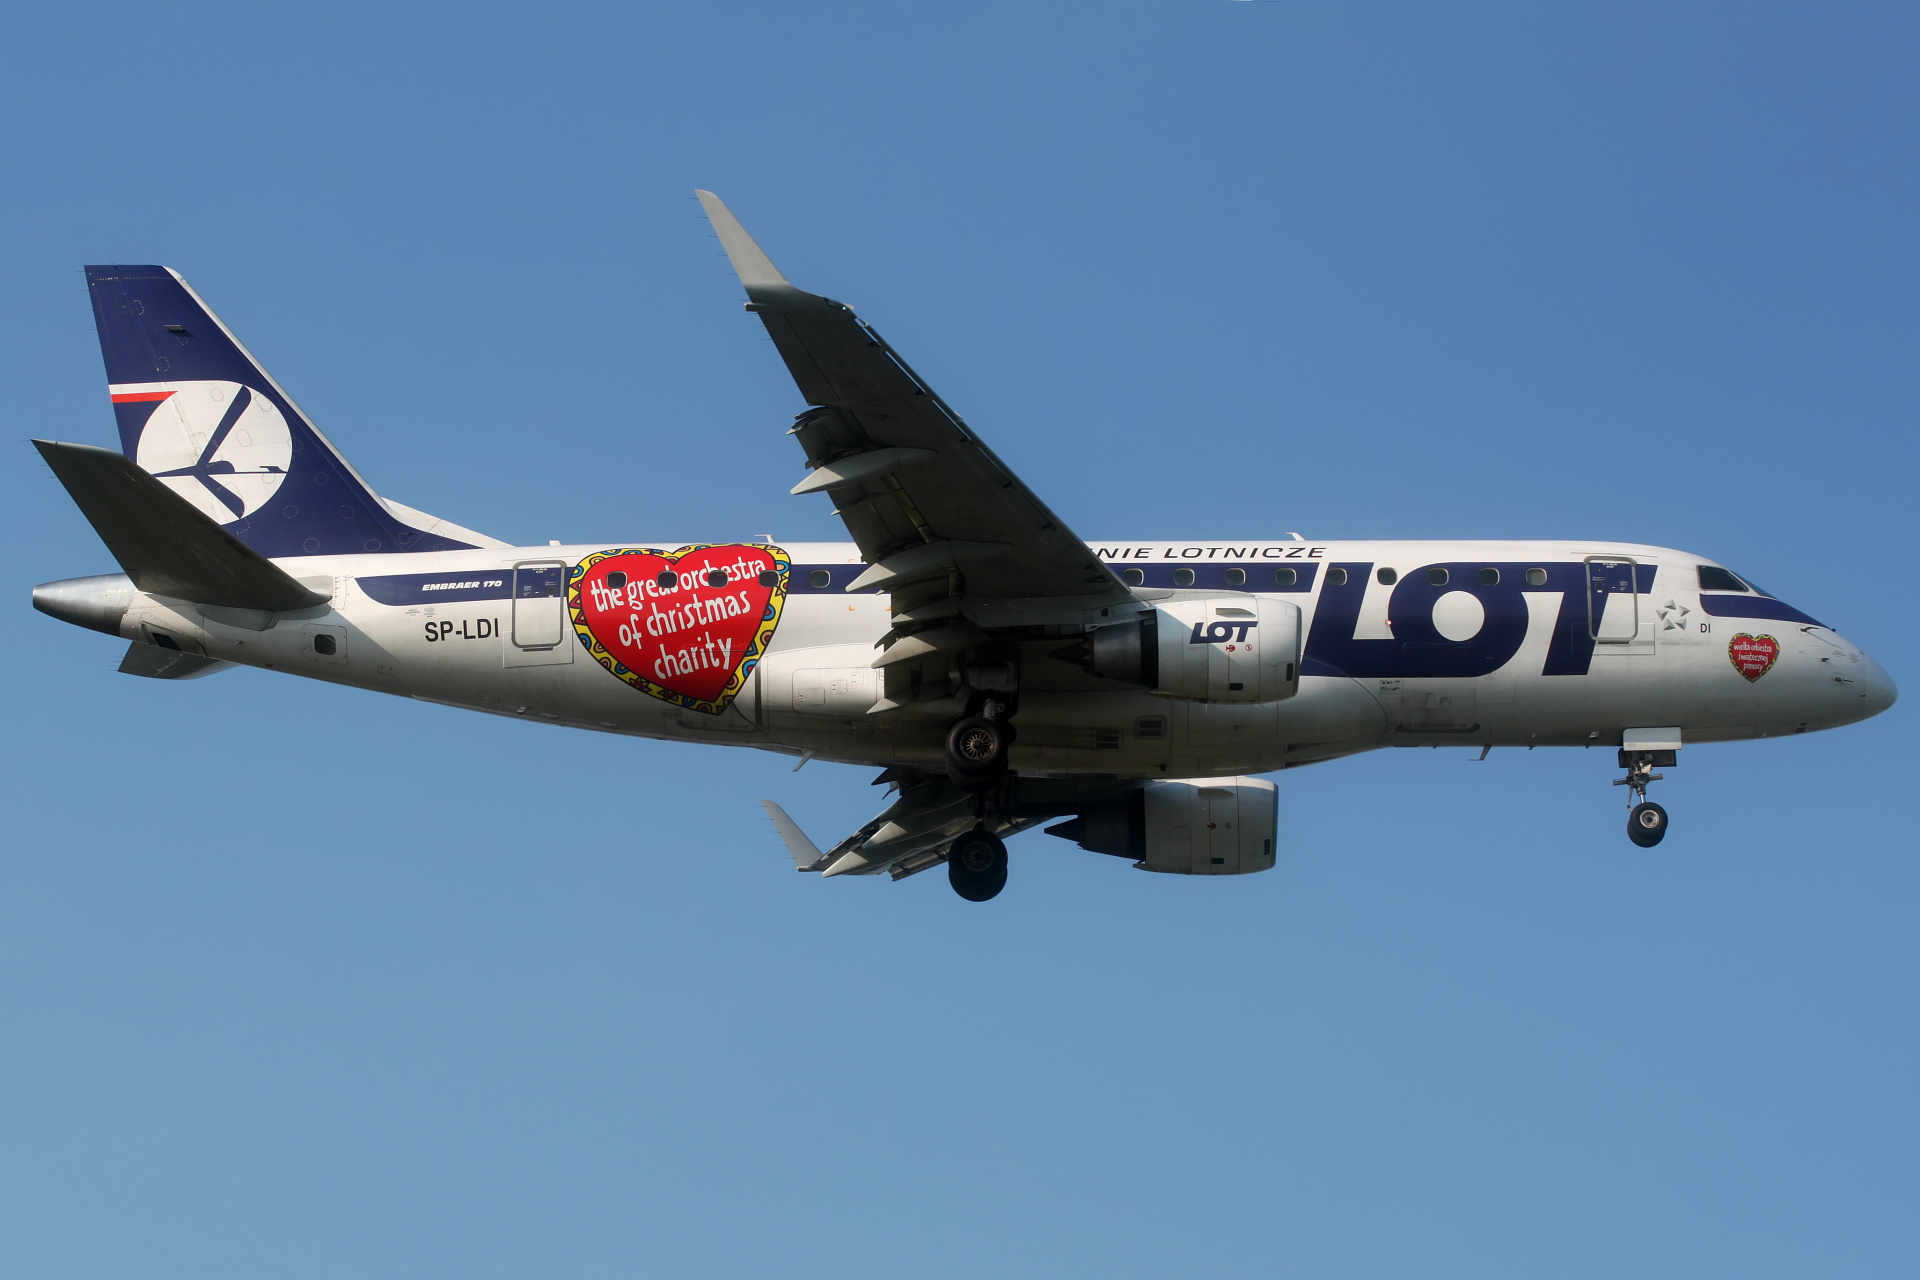 SP-LDI (WOŚP logos) (Aircraft » EPWA Spotting » Embraer E170 » LOT Polish Airlines)